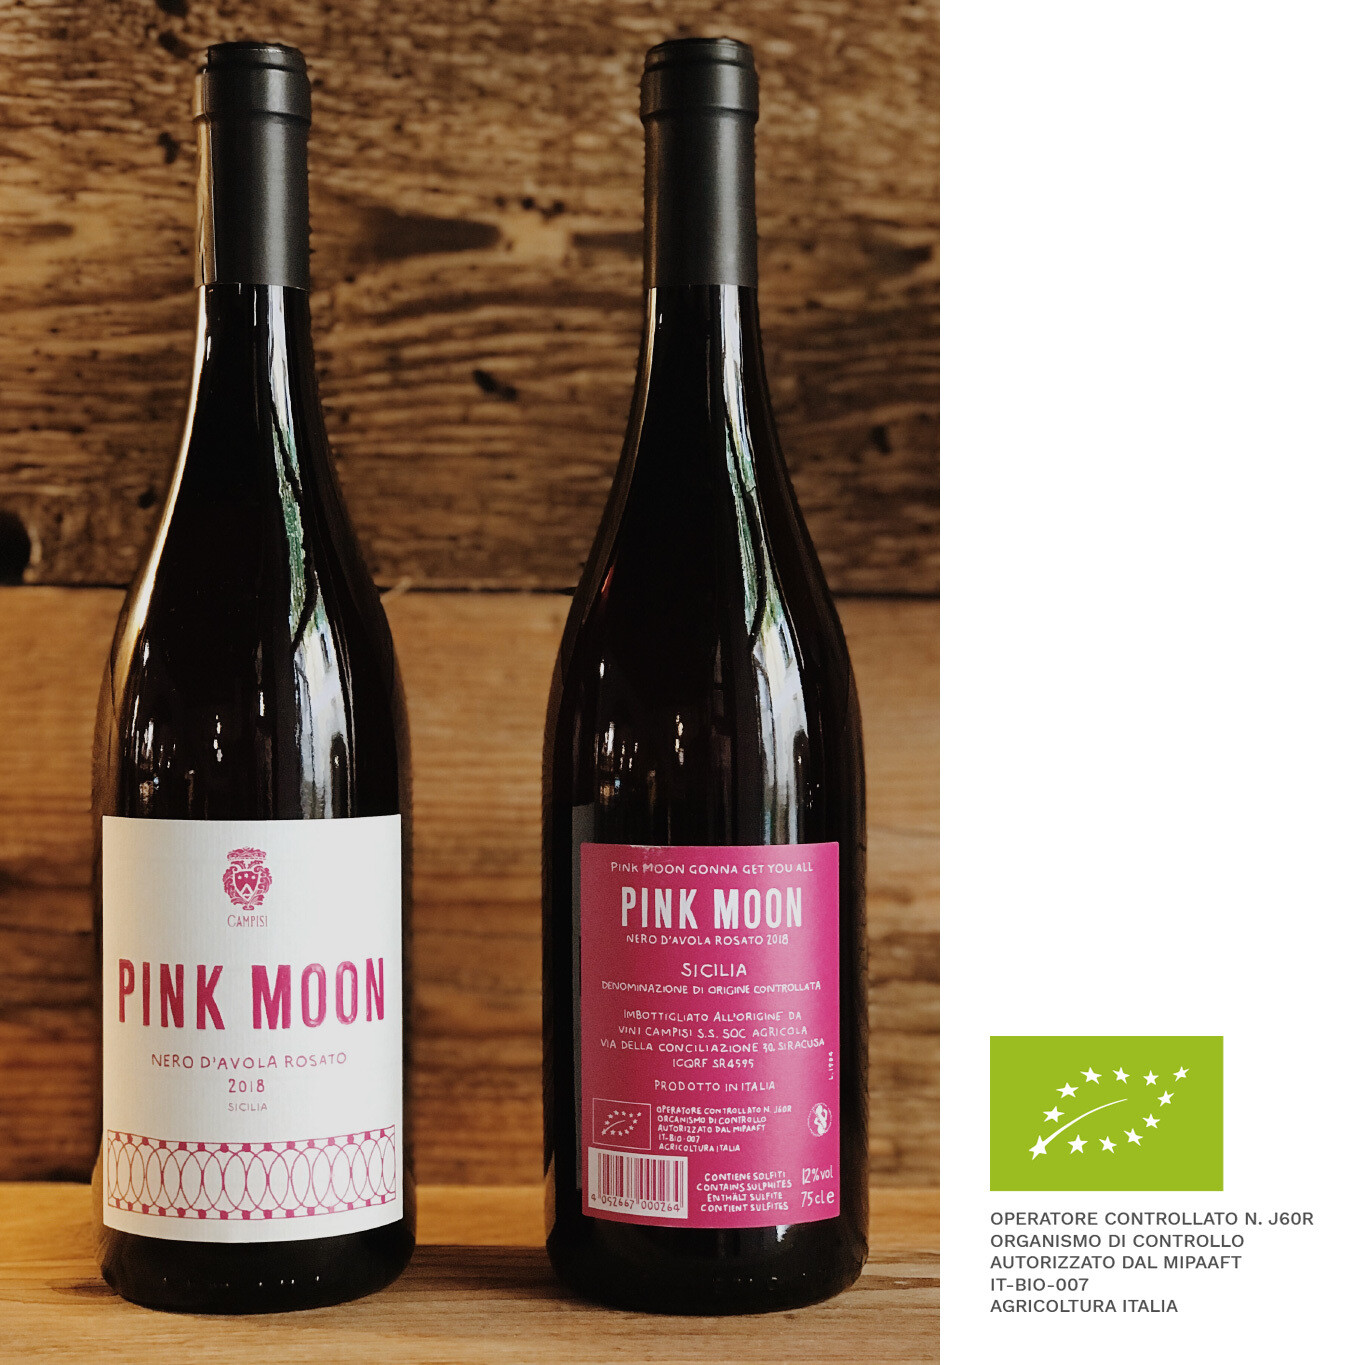 PINK MOON 2020 - Nero d'avola rosato